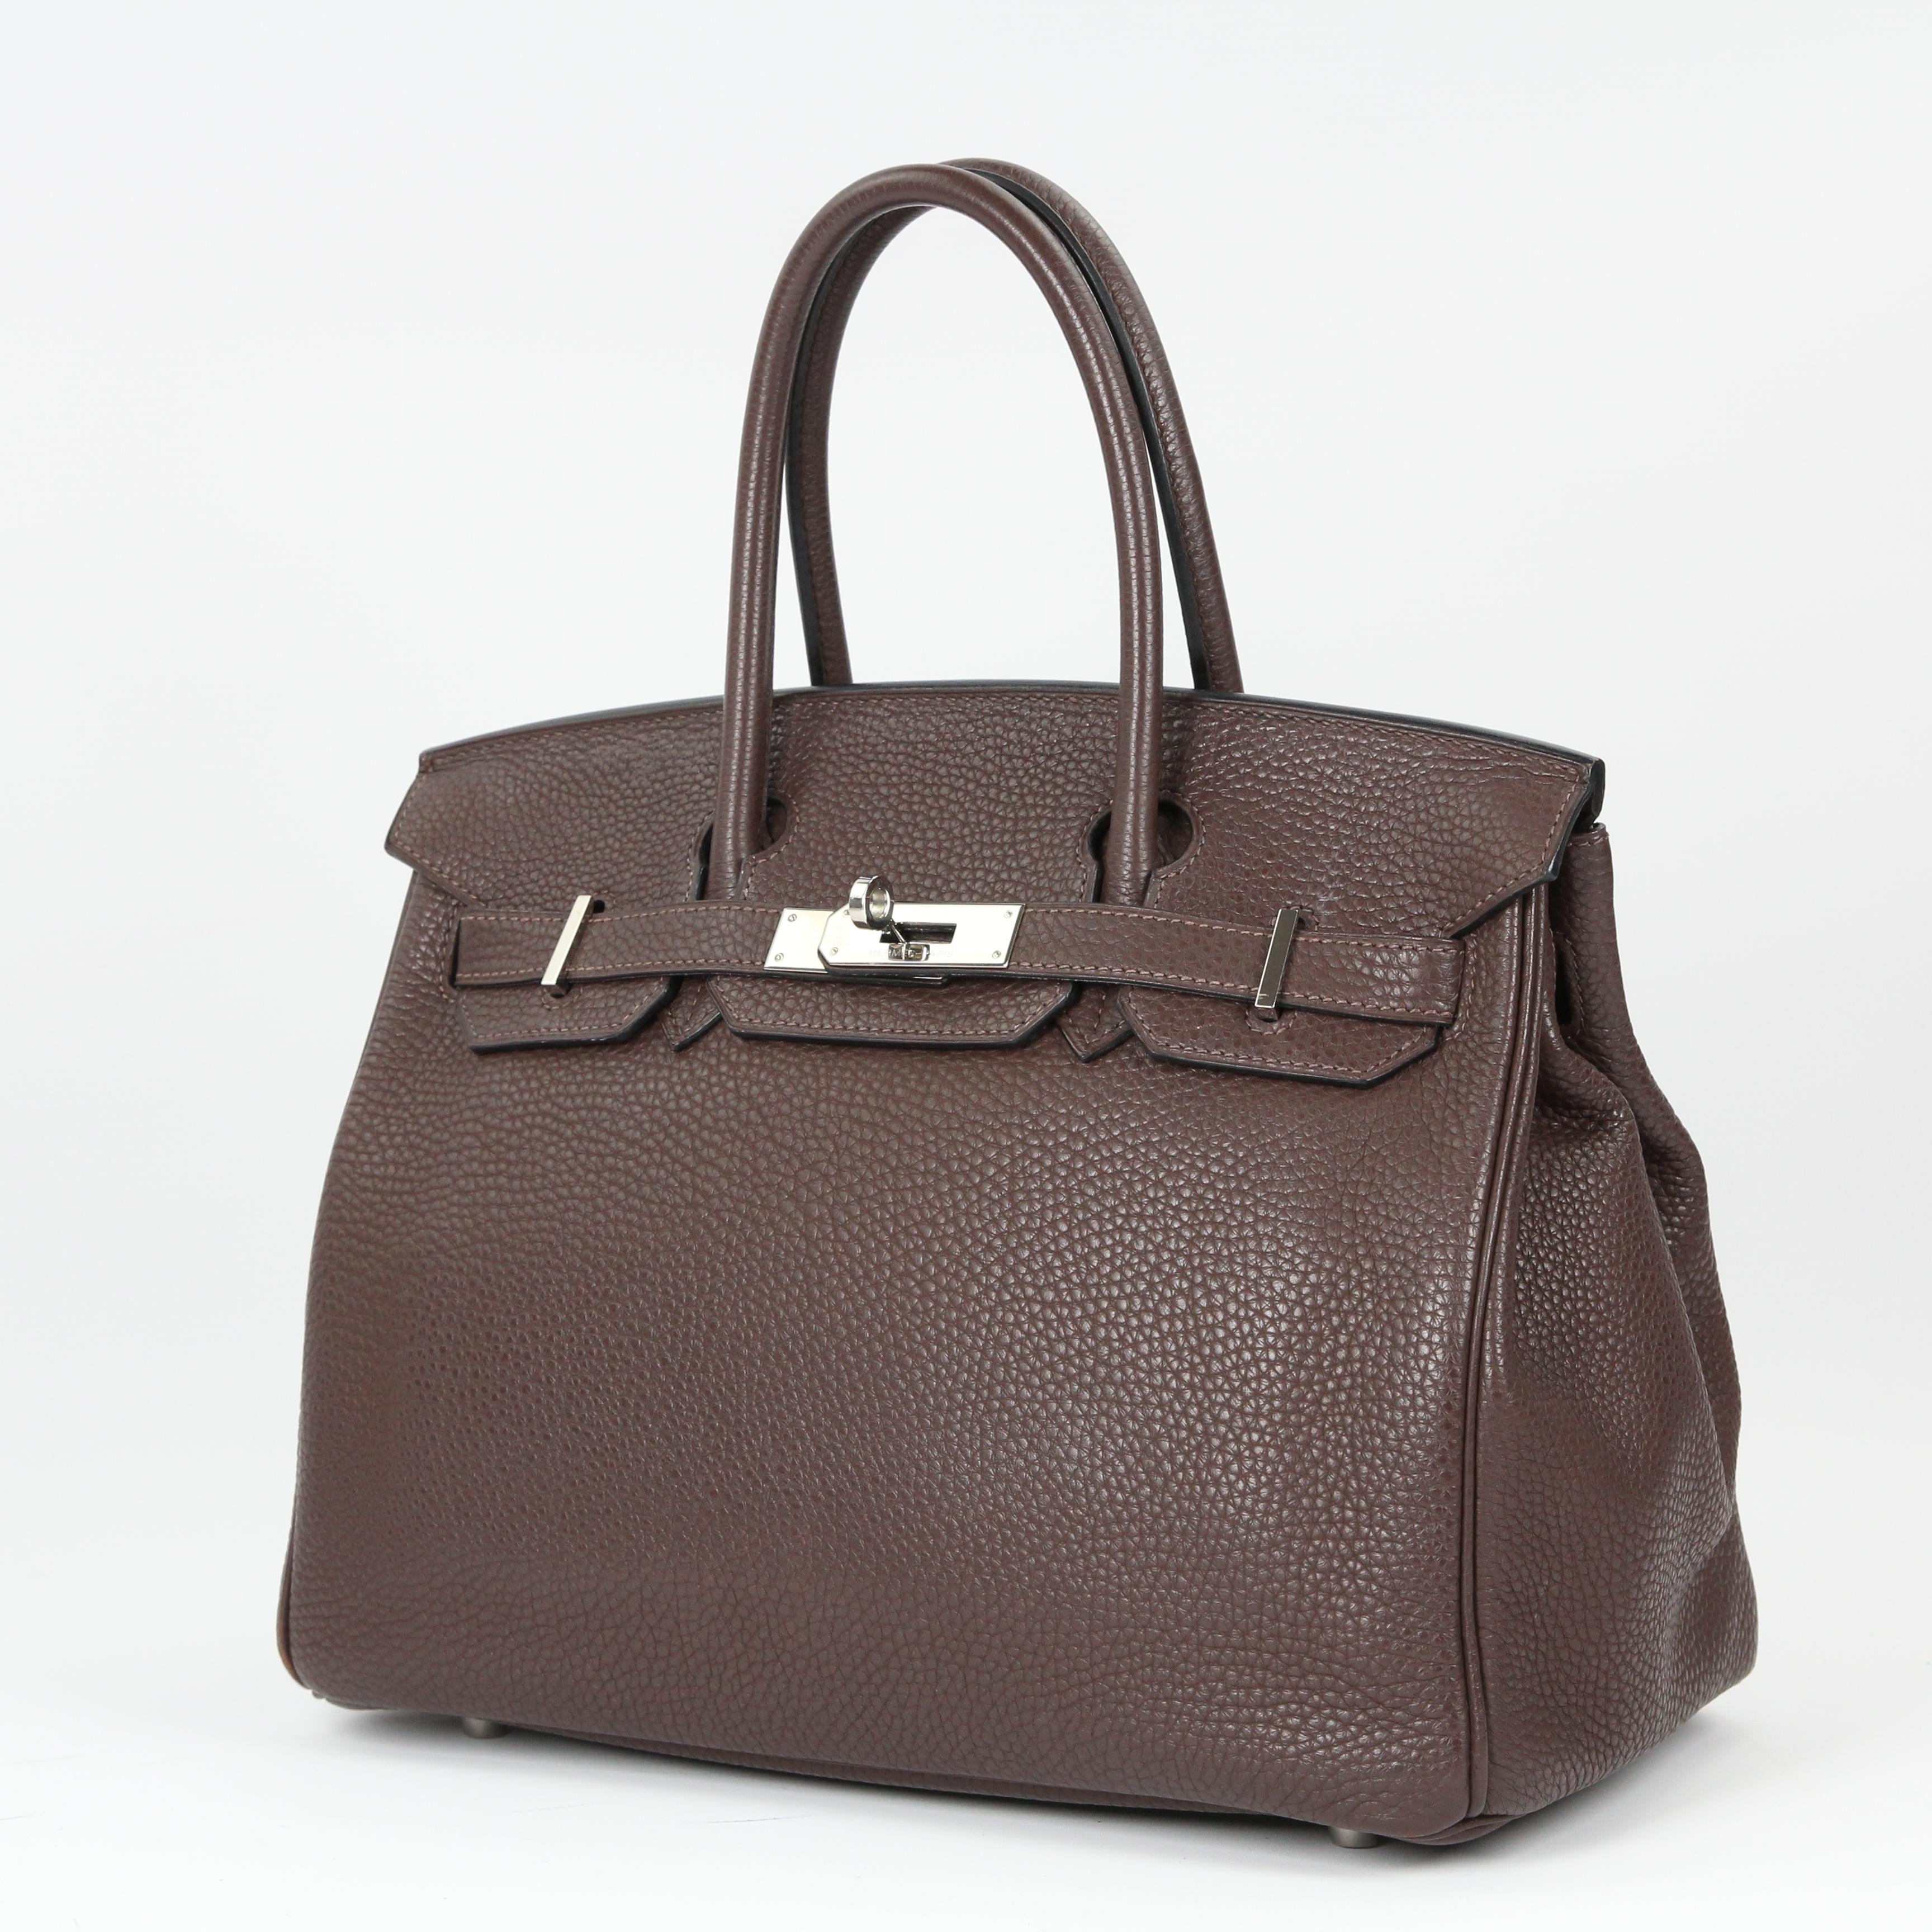 Hermès Birkin 30 leather handbag For Sale 6